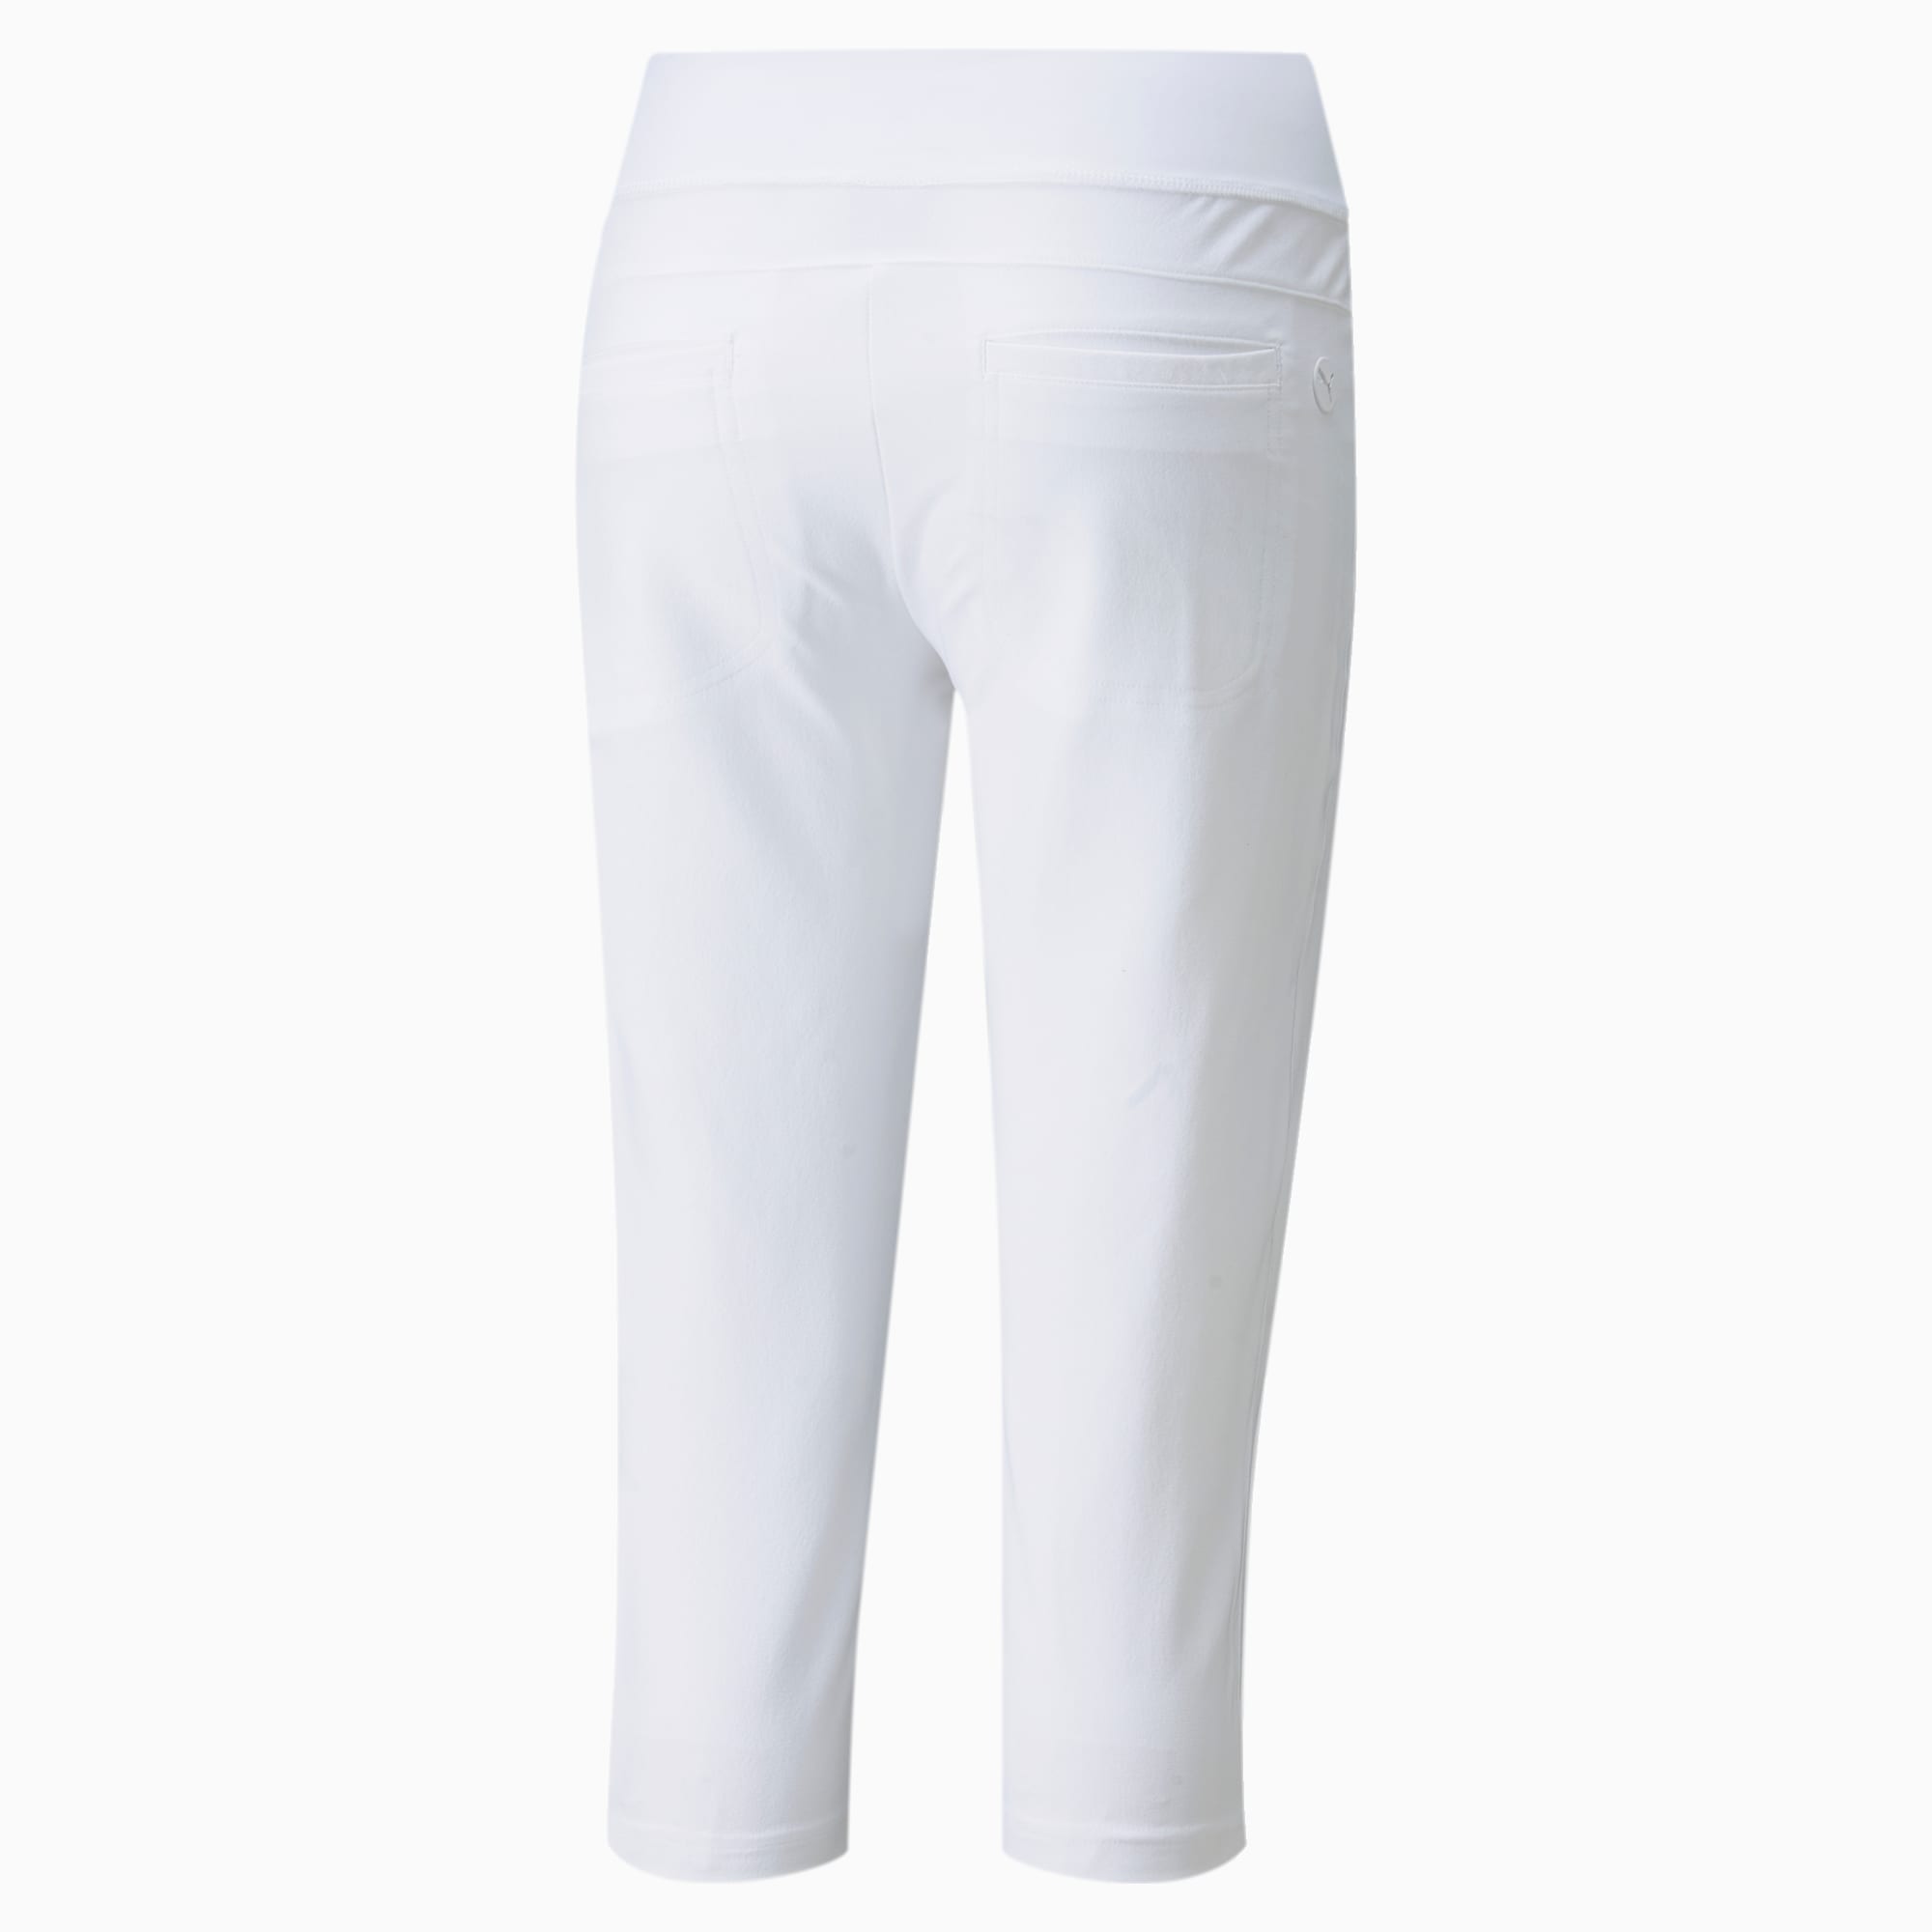 PUMA PWRSHAPE Damen Golf Capri-Hose, Weiß, Größe: L, Kleidung